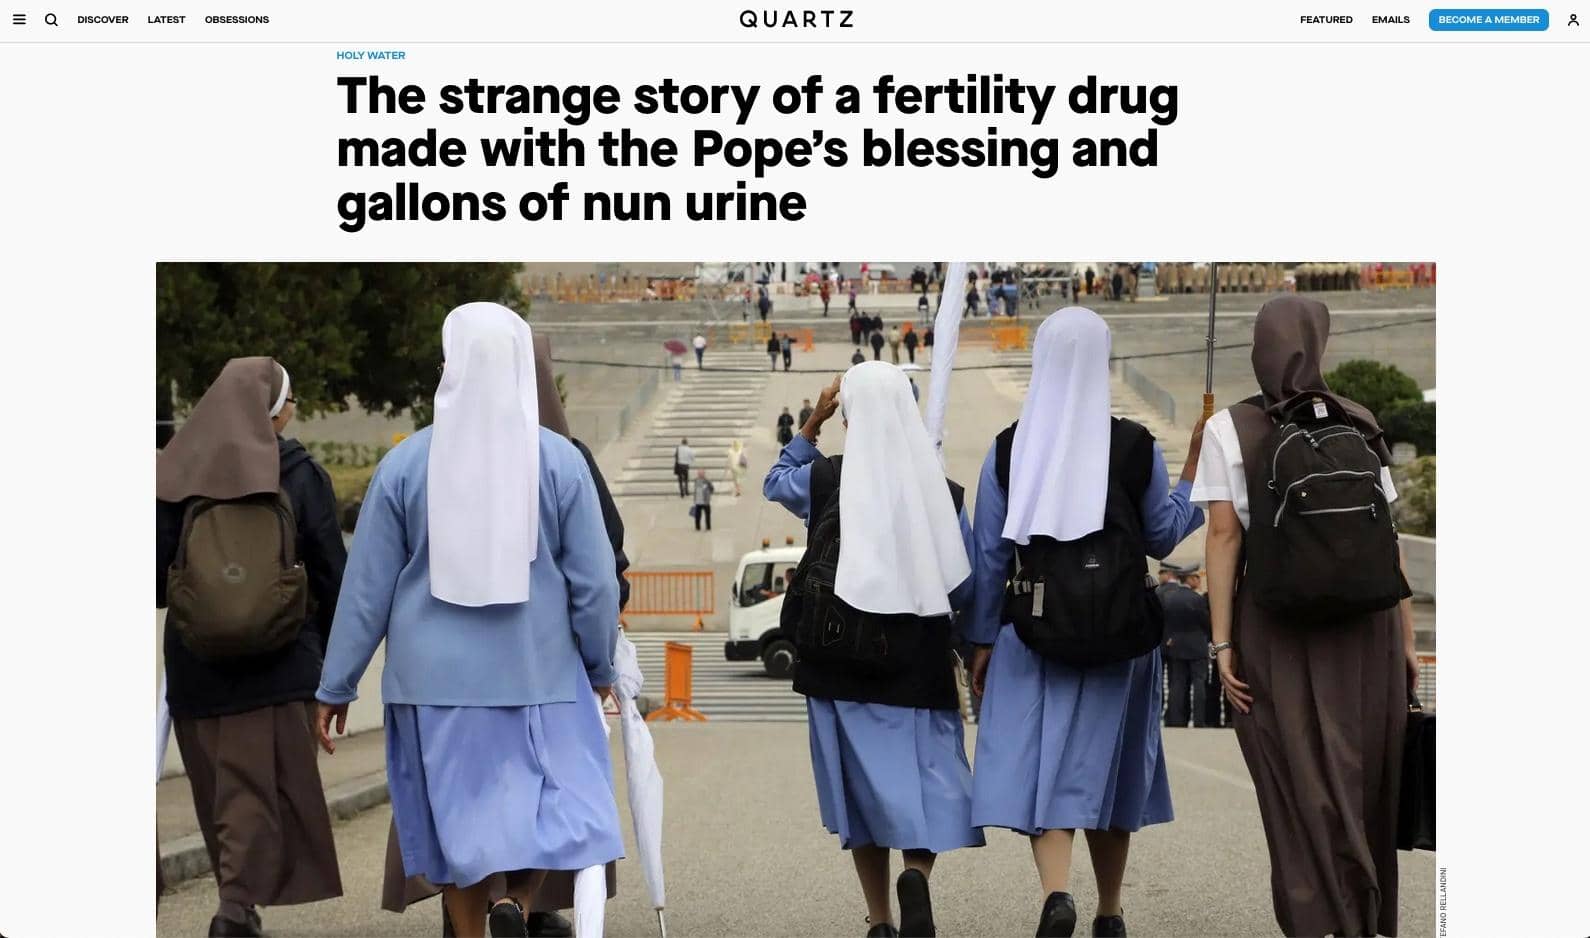 Nuns Urine - Contains Non Synthetic Bioidentical Hormones